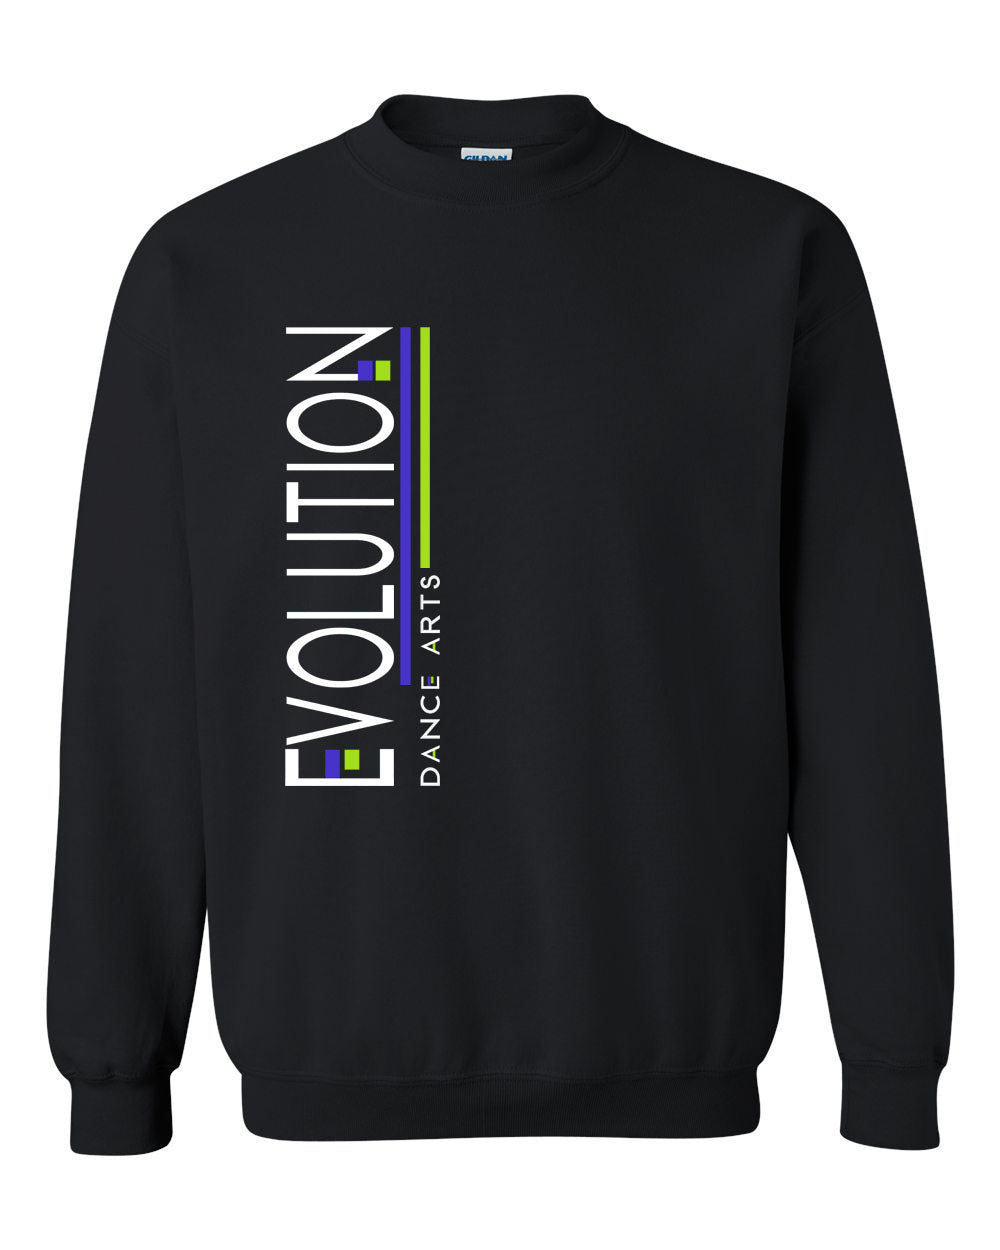 Evolution Dance Arts Design 5 non hooded sweatshirt